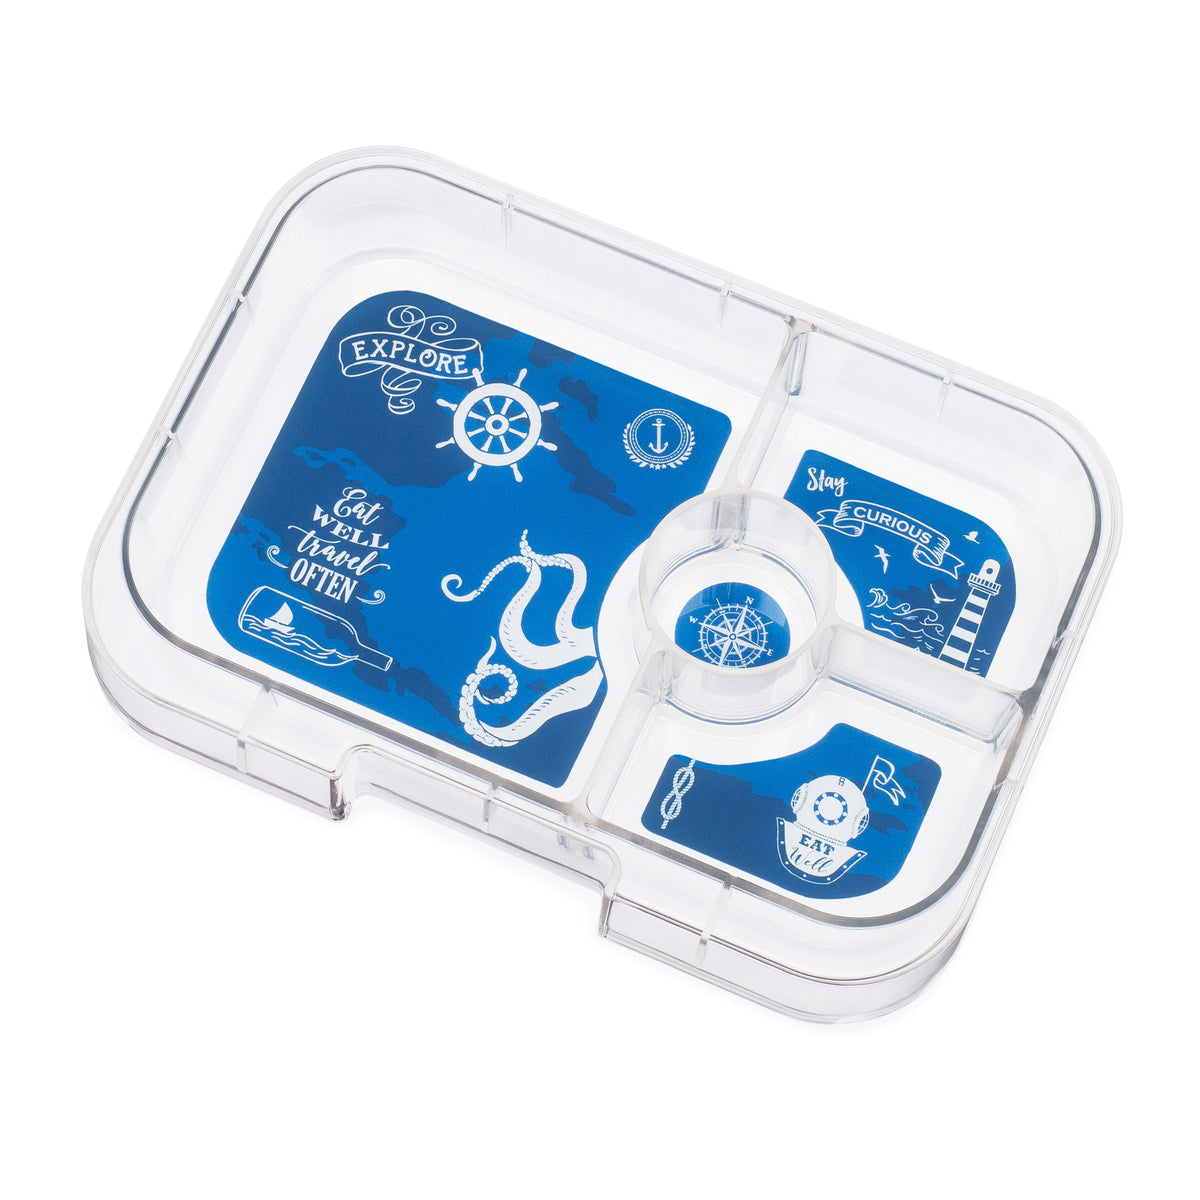 yumbox-panino-kashmir-blue-4-compartment-lunch-box- (3)